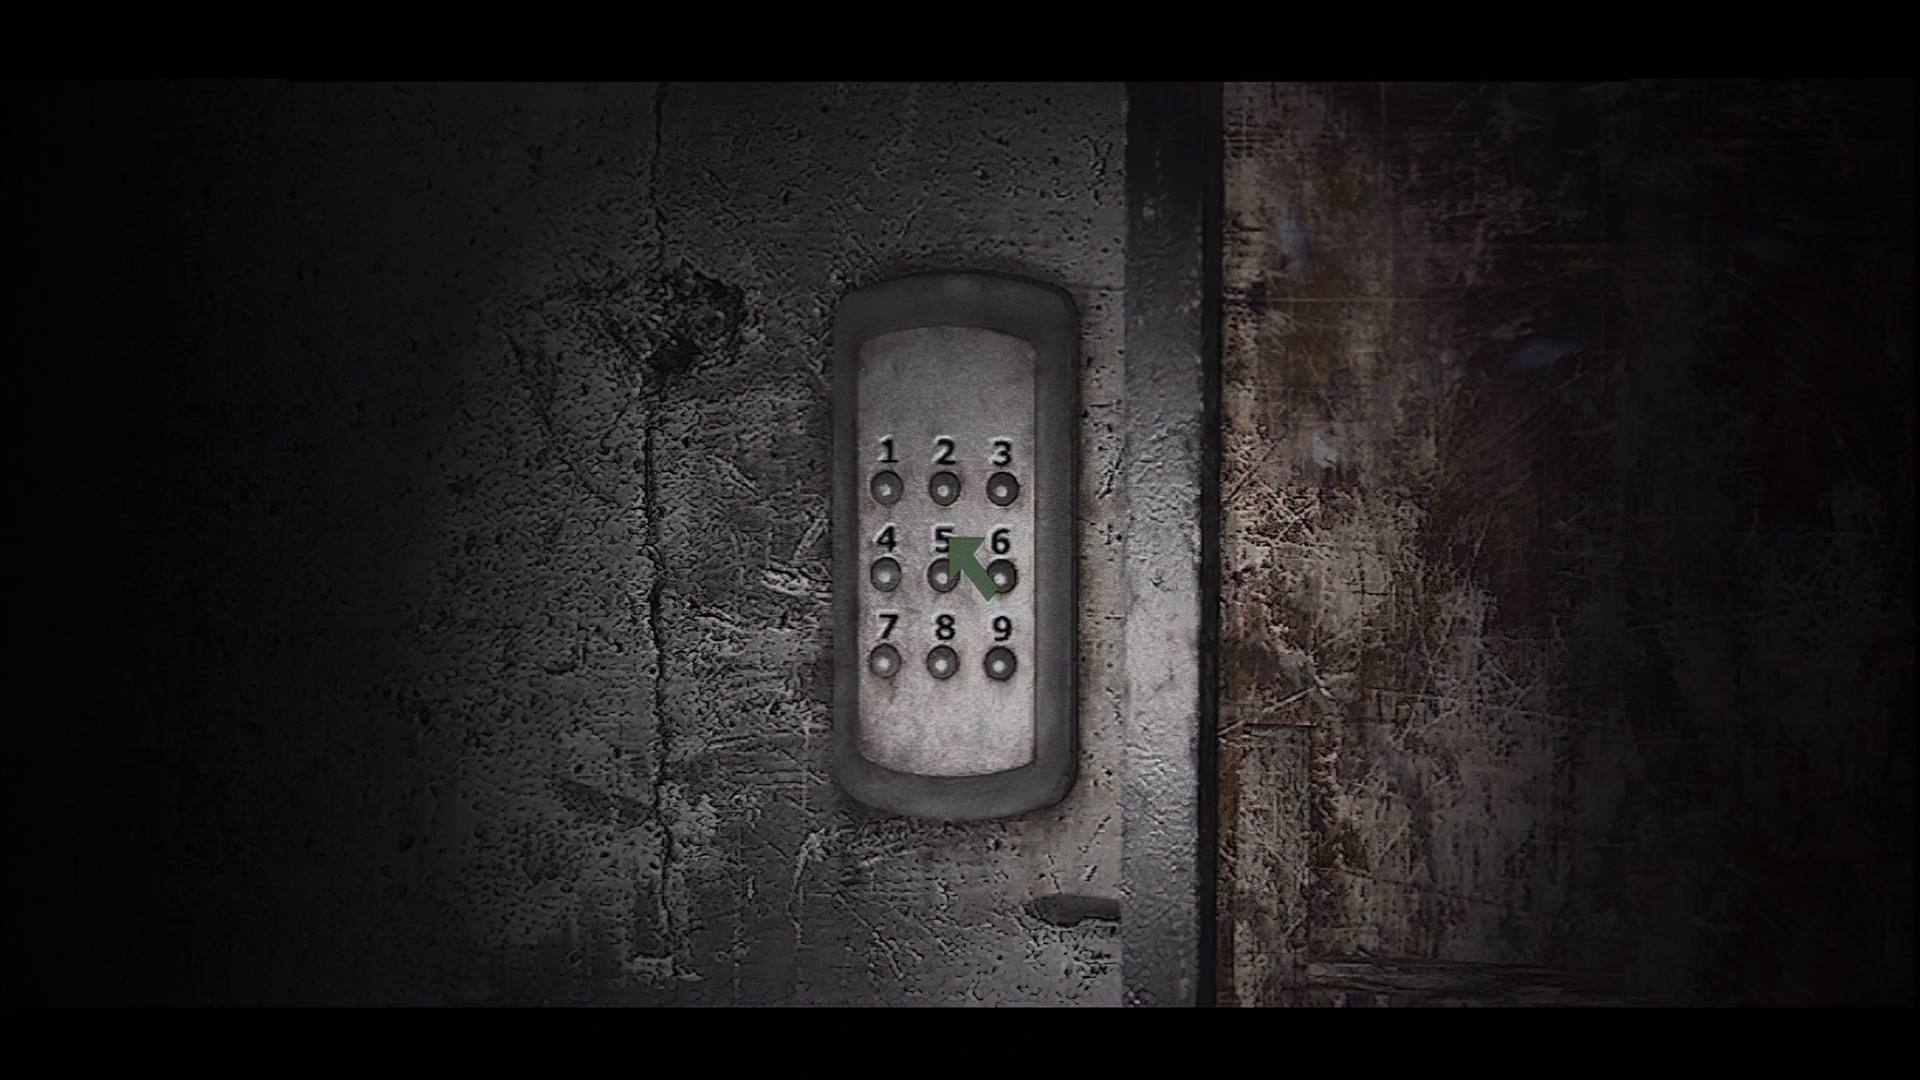 Silent Hill 2 hospital door code puzzle